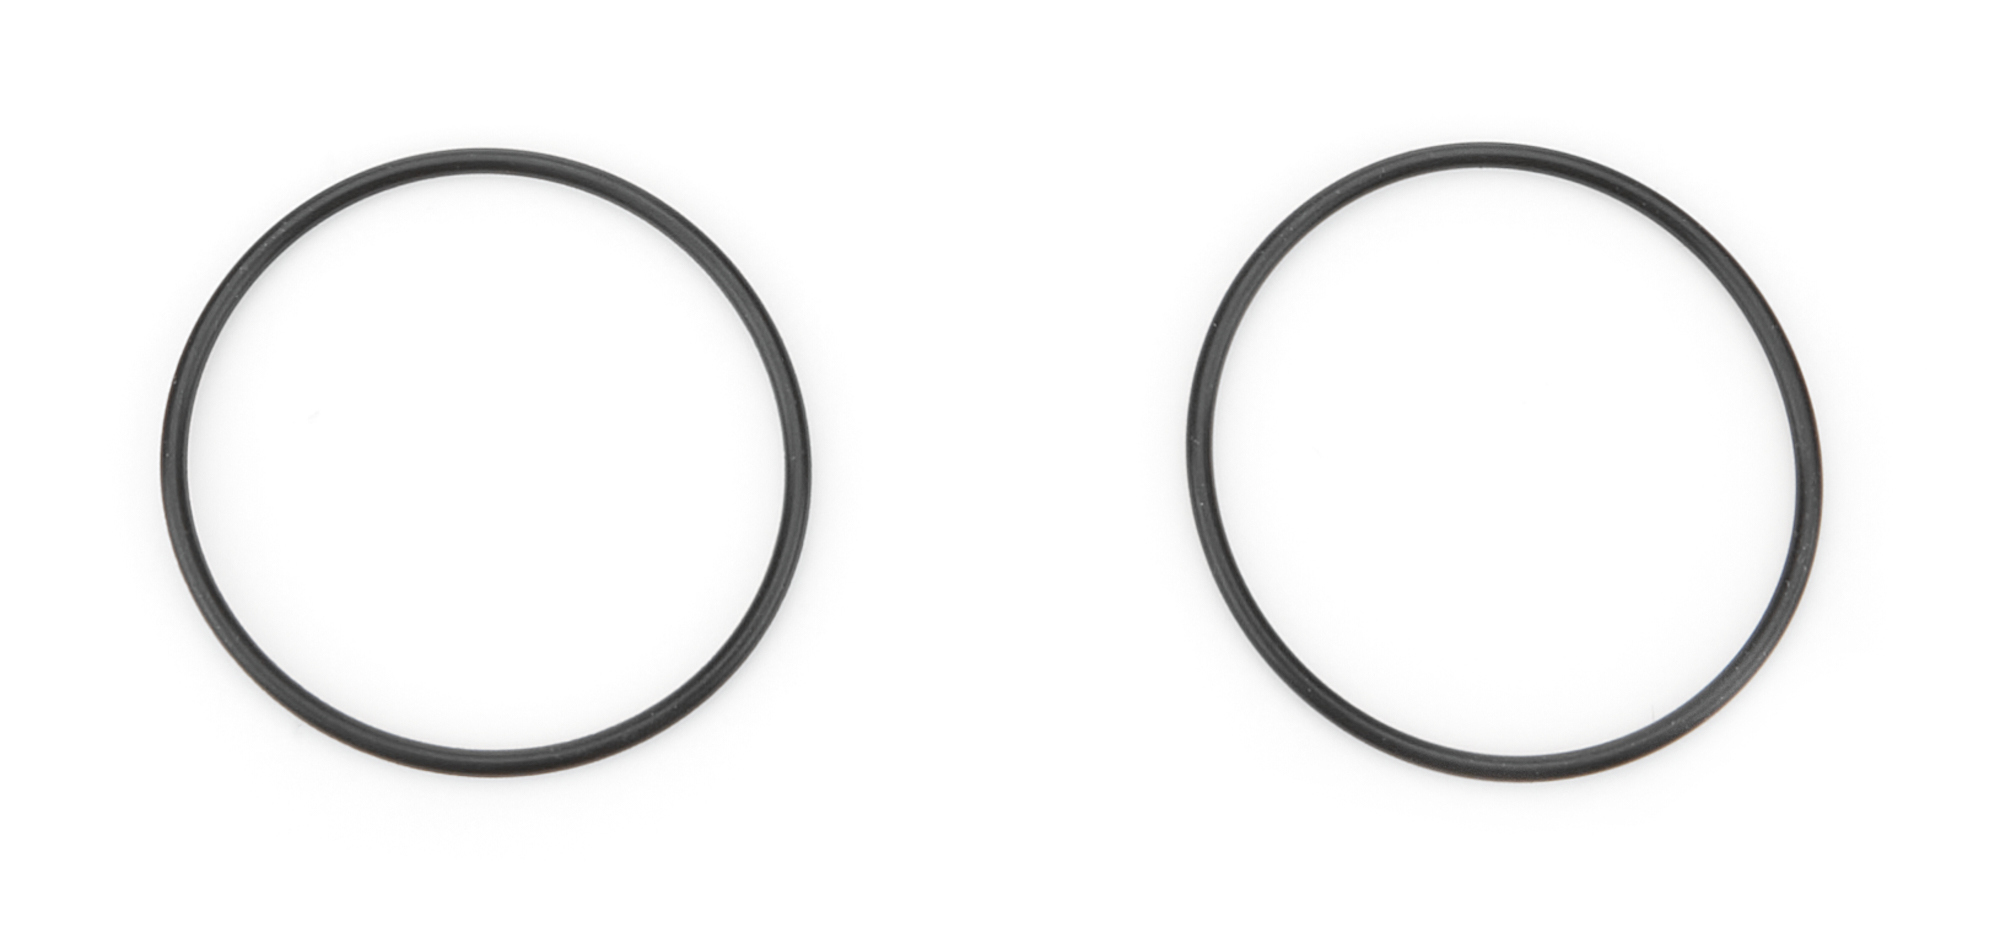 Kevko Oil Pans OR-150 O-Ring, 1.489 in Inside Diameter, 1.629 in Outside Diameter, Rubber, Black, Pair